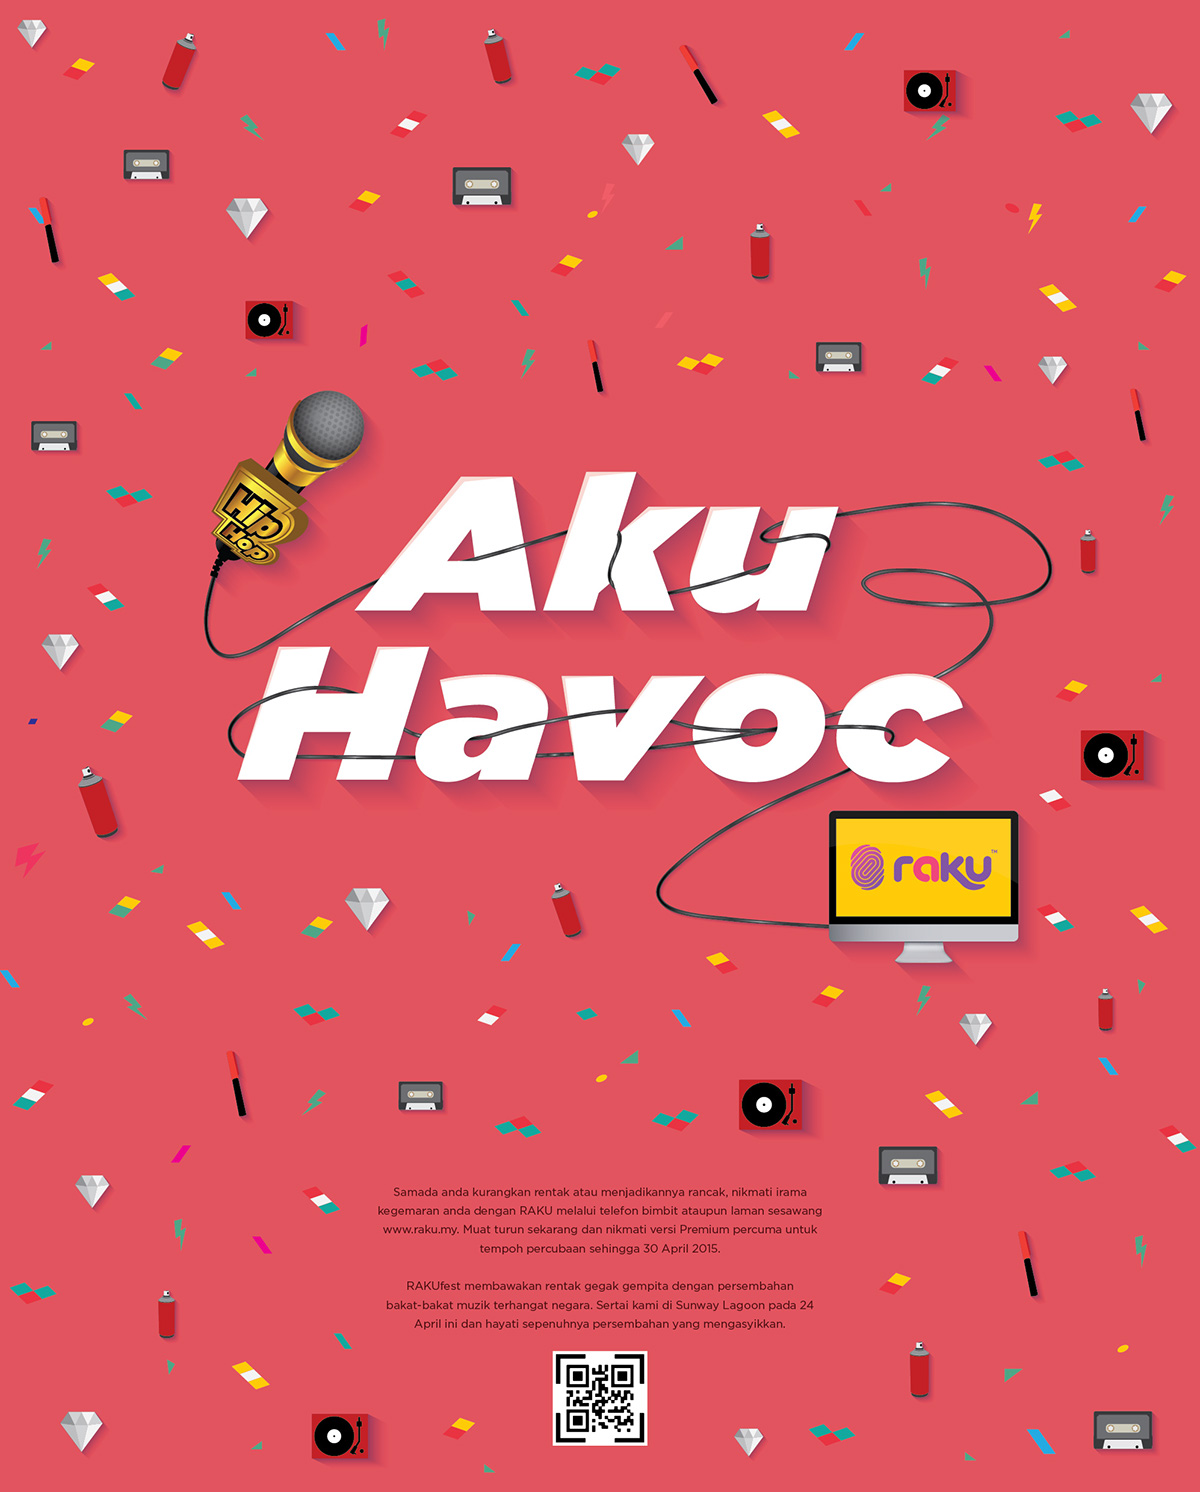 #astro #raku #radio   #Malaysia  #media #icons #punk #hiburan #malay #melayu #havoc #indie #music